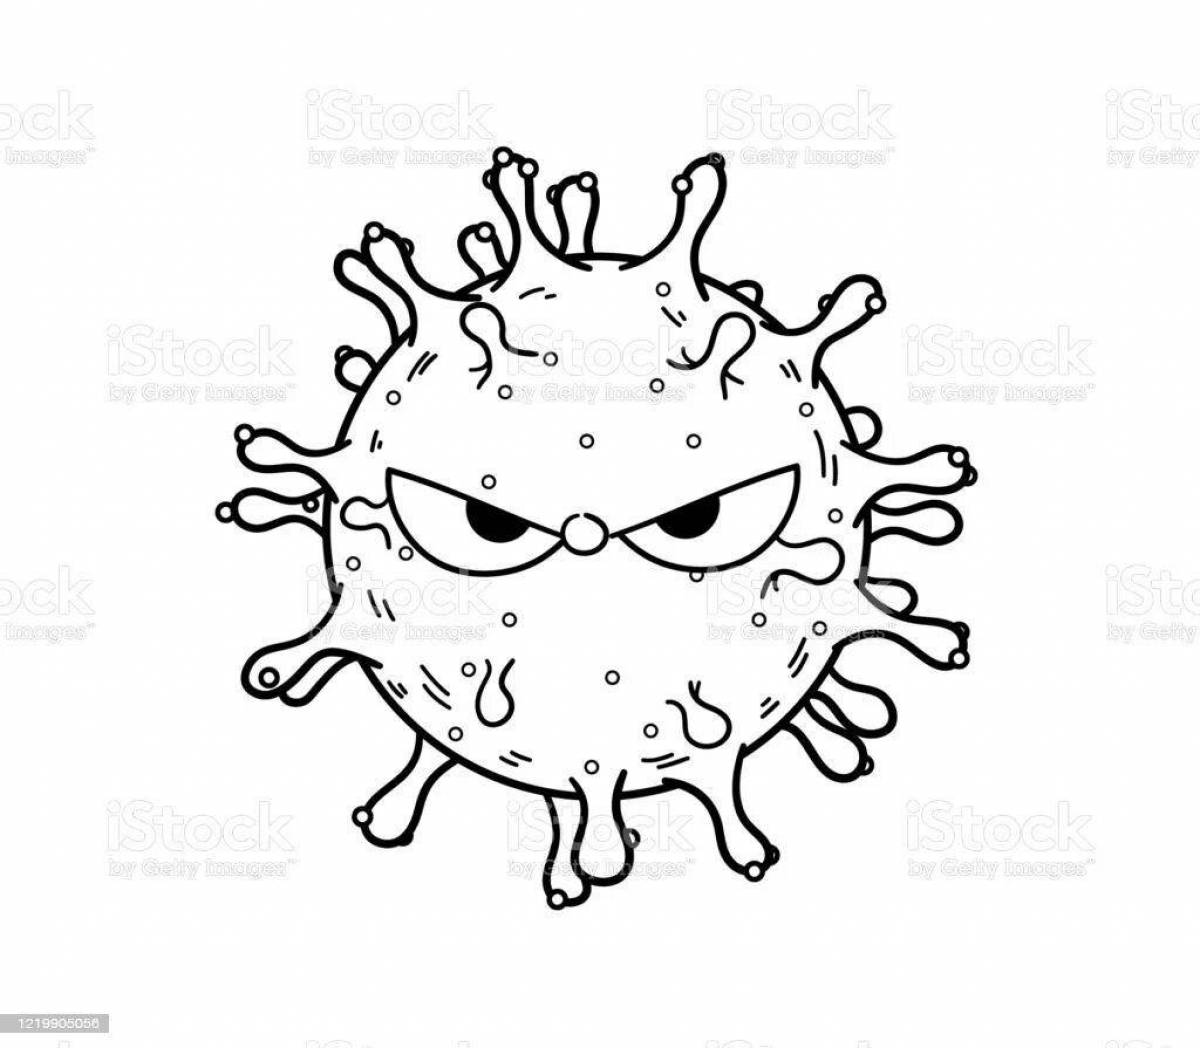 Coloring page fascinating anti-stress viruses